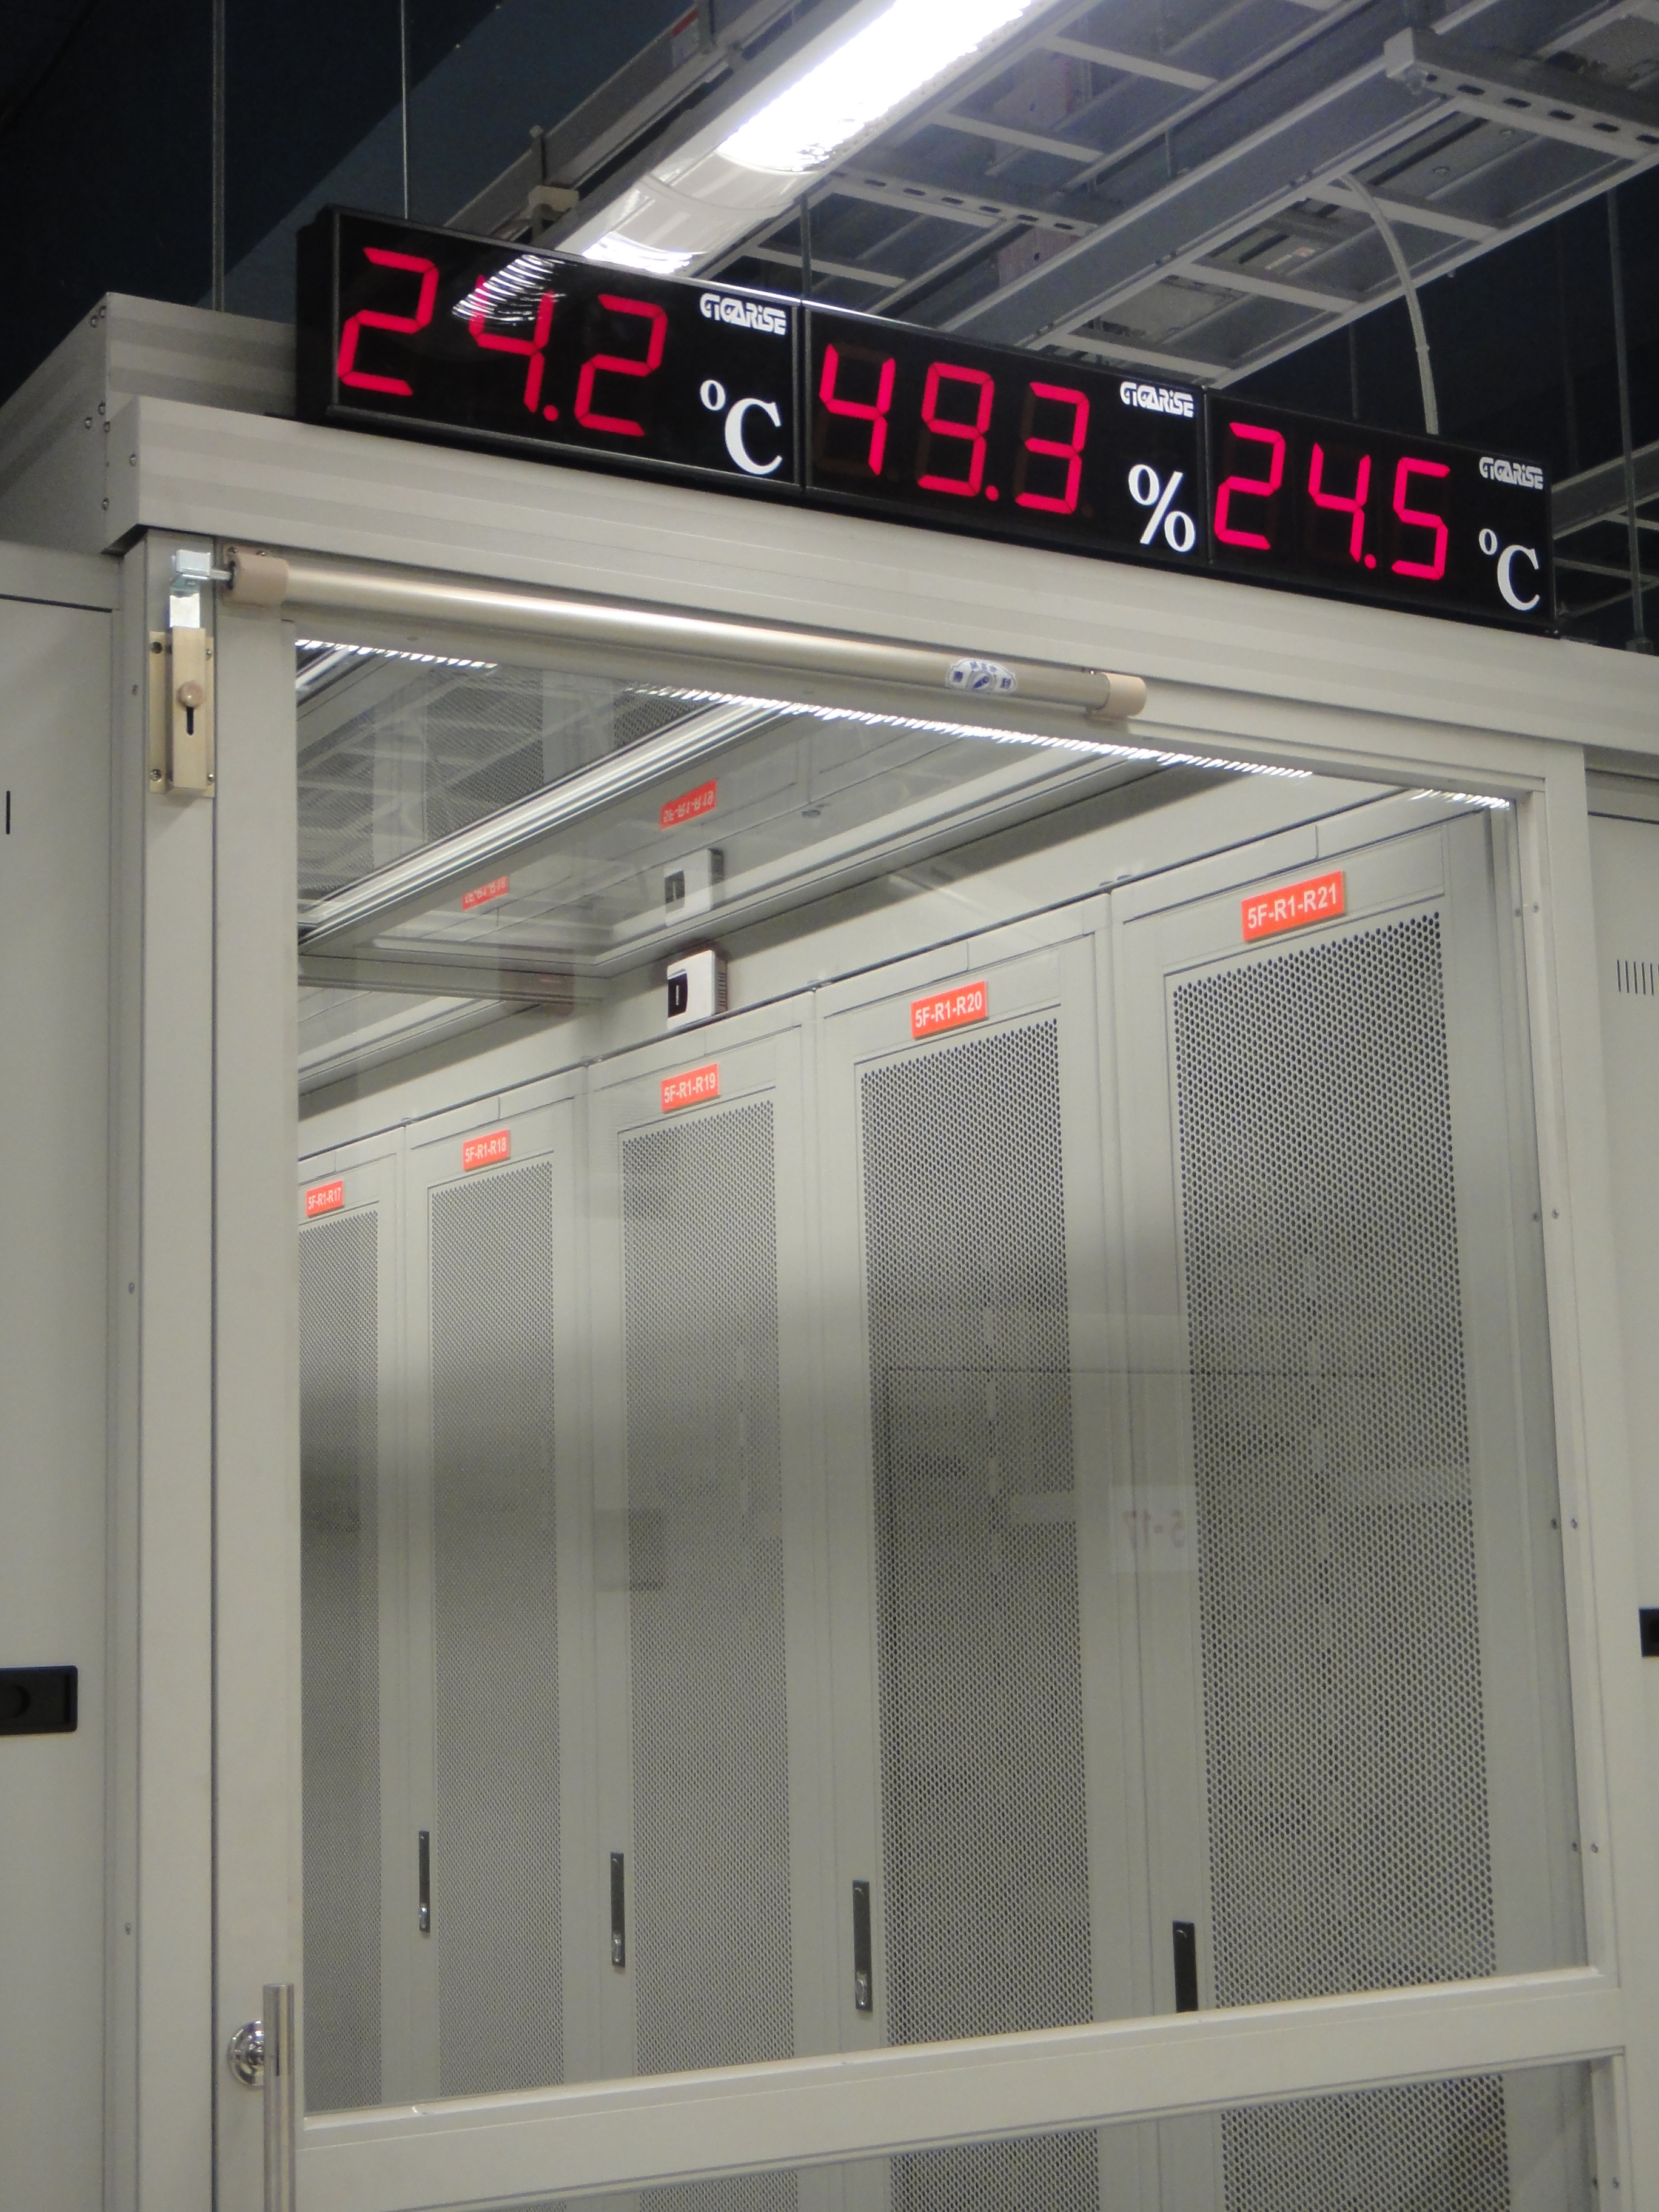 SD803-冰機出水温度顯示看板-GIGARISE-冰機回水温度大型顯示器-PM2.5傳送器-二通閥溫溼度控制,表面溫度傳感器,三通溫溼度控制閥,溫溼度送風機, 熱電偶溫度電動閥,溼度膨脹閥控制 - 20231025144635-216806334.JPG(圖)